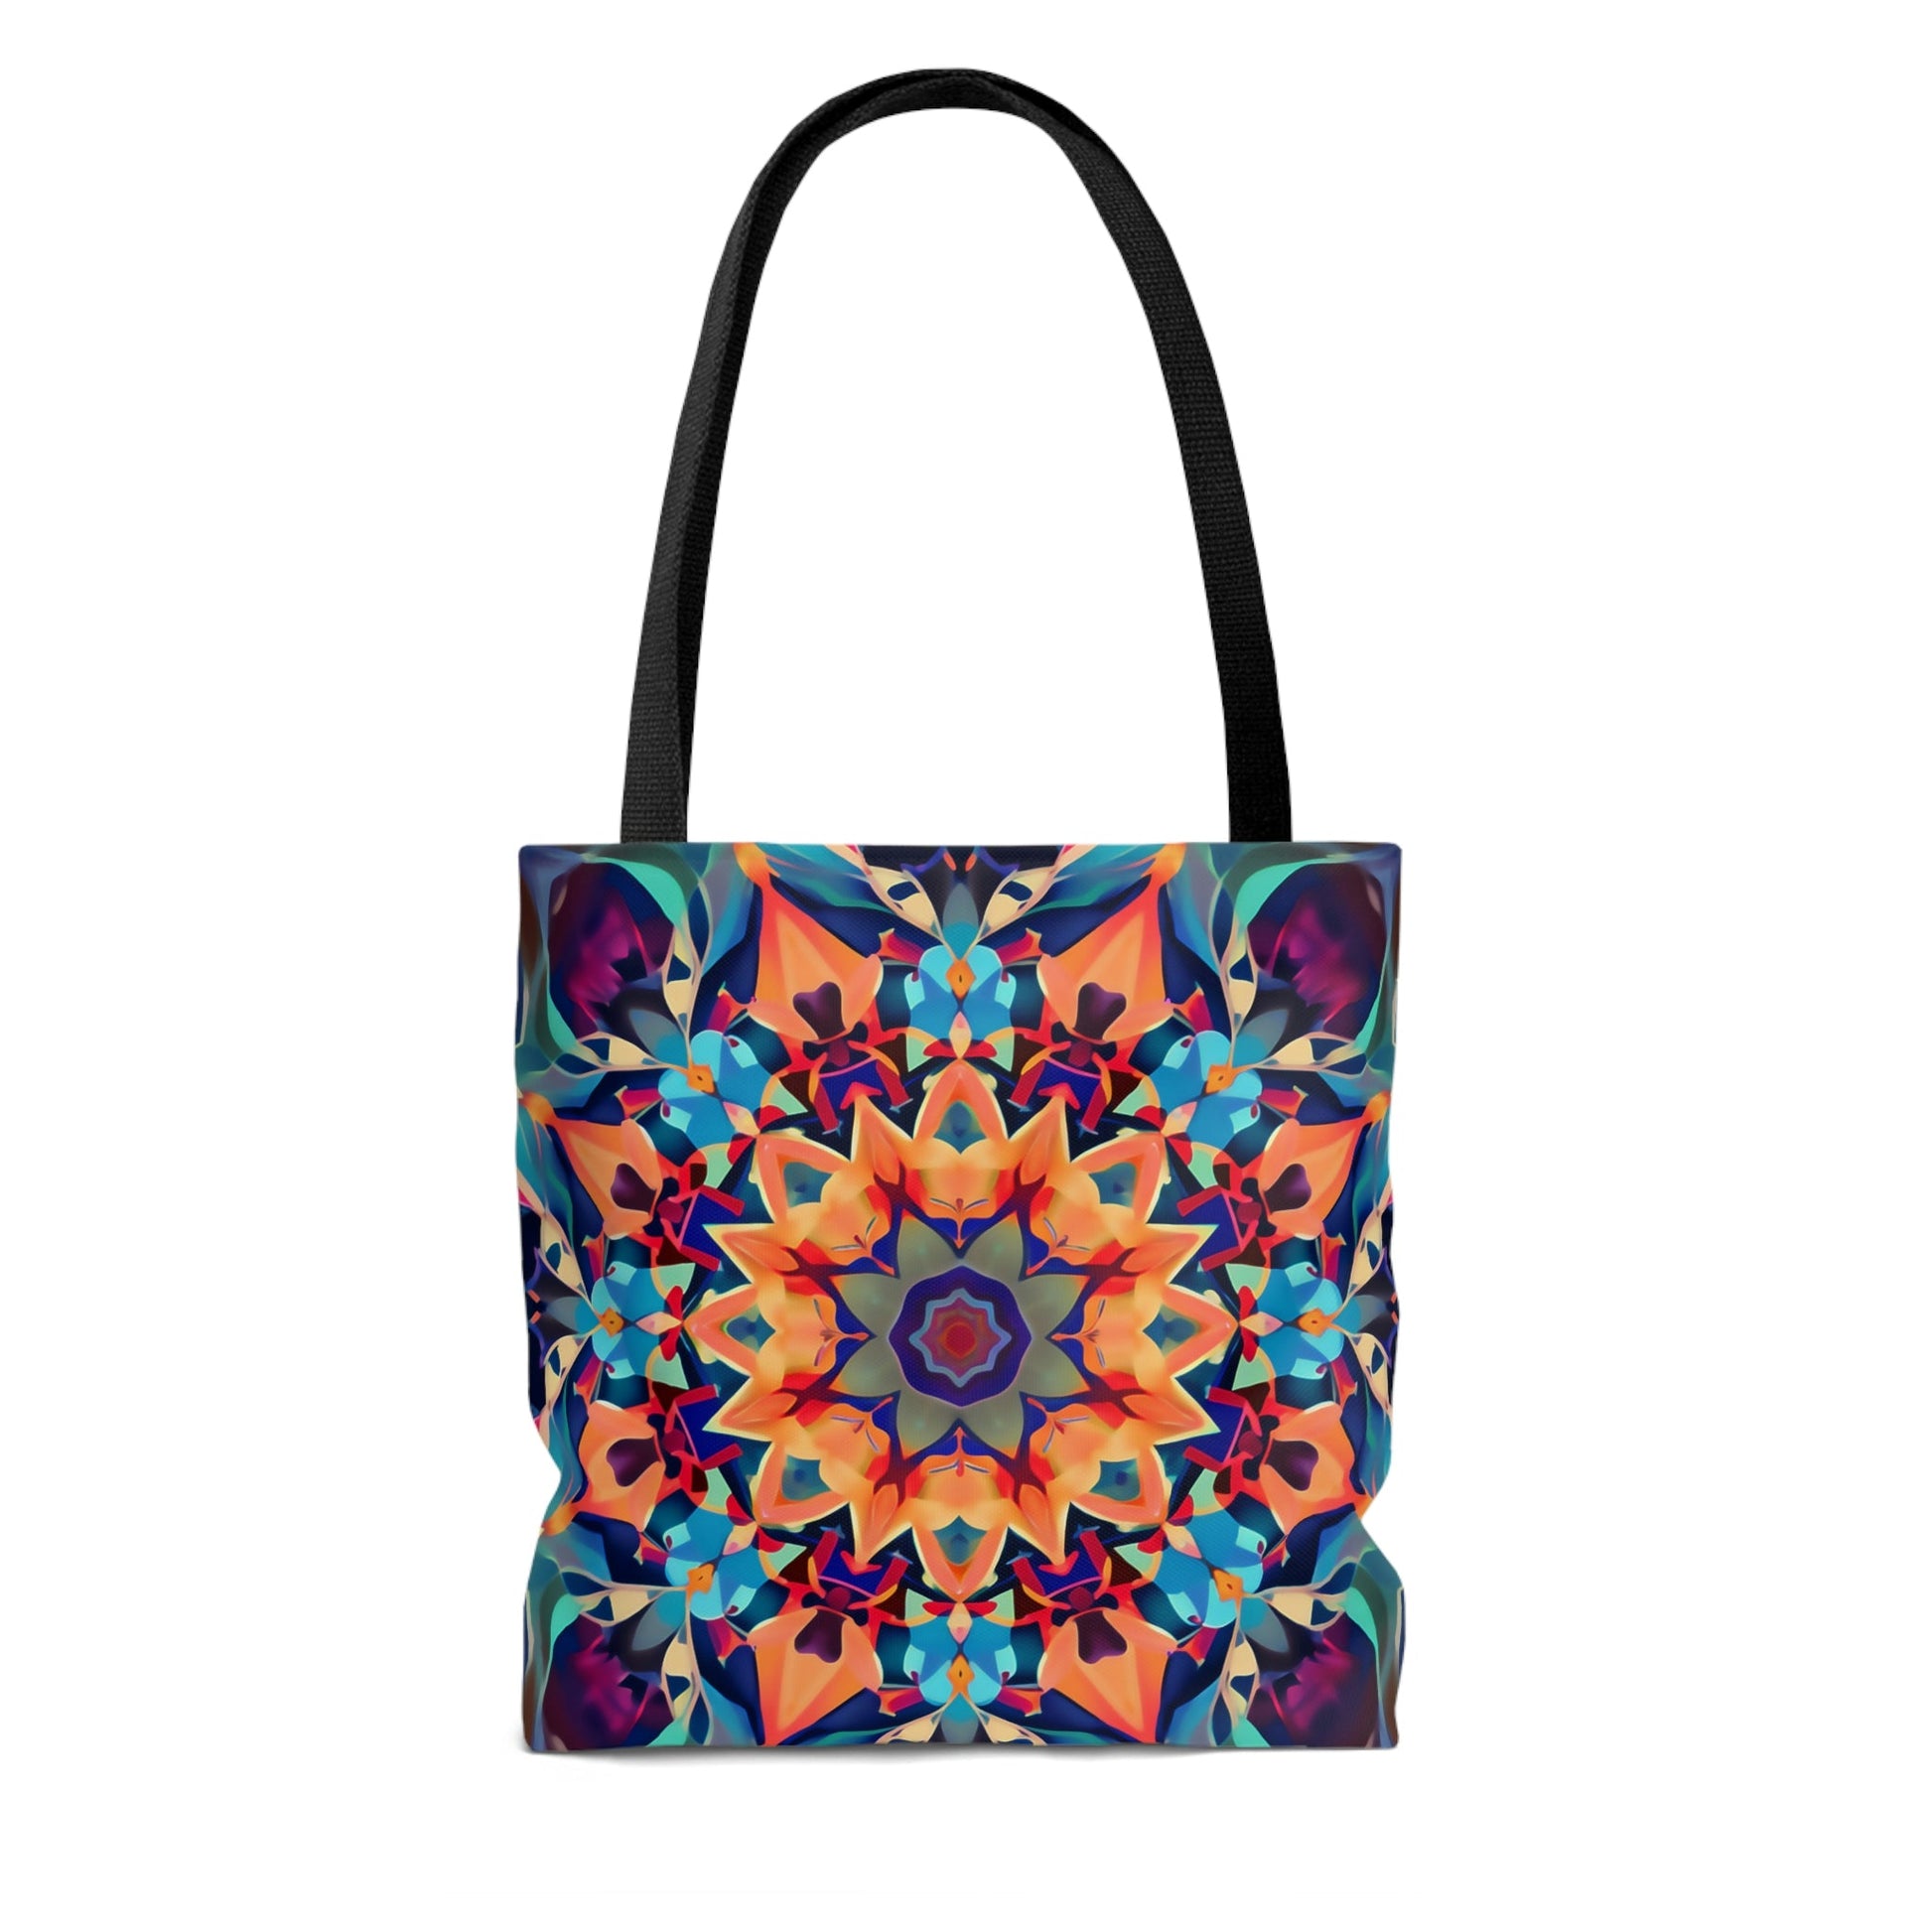 BOHO Abstract Mandala Design on Tote Bag